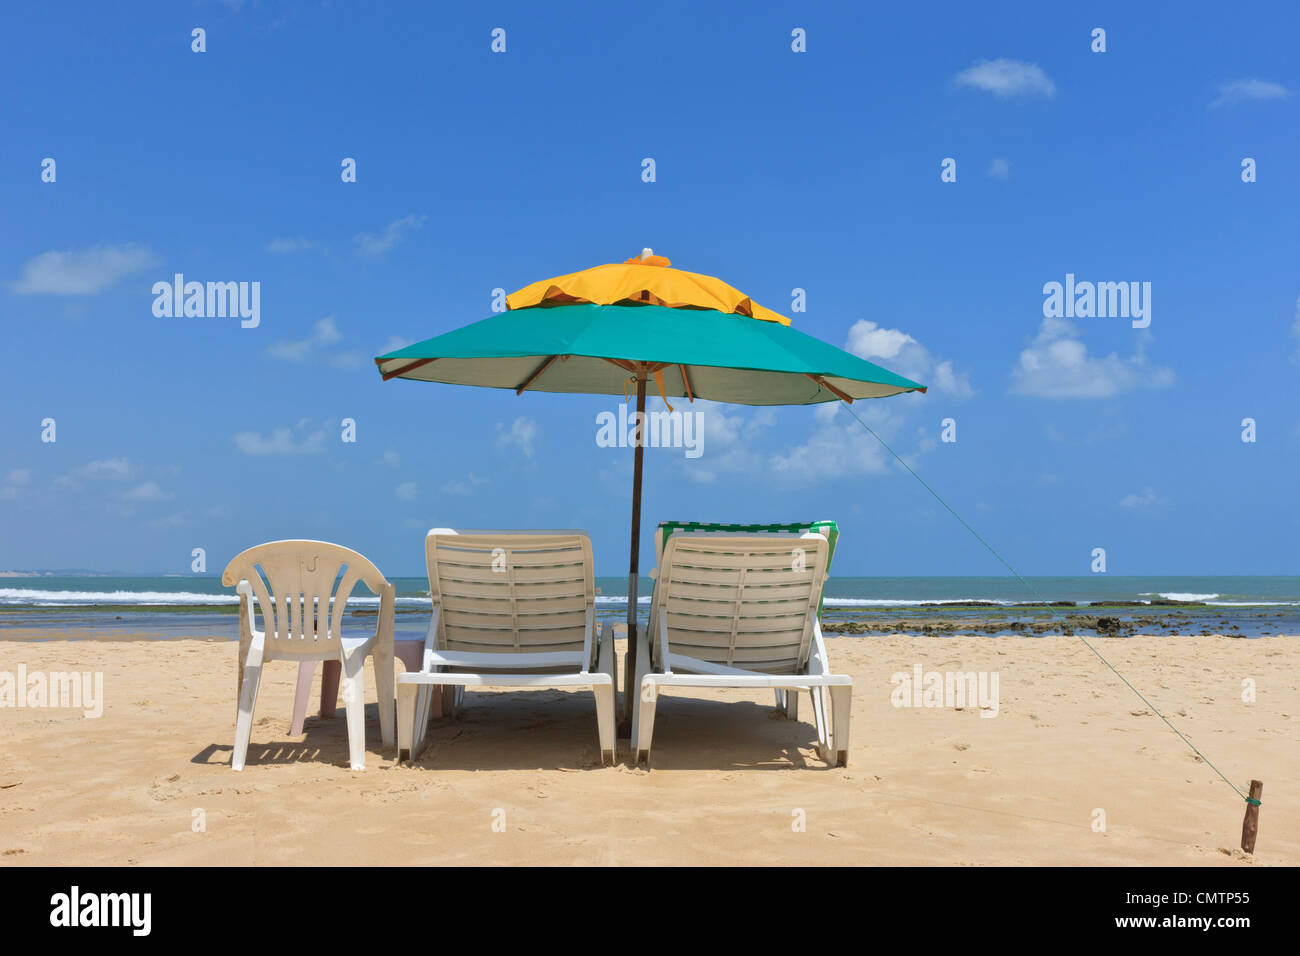 parasol, umbrella, sunshade, sun umbrella with beach chairs on beach Stock Photo